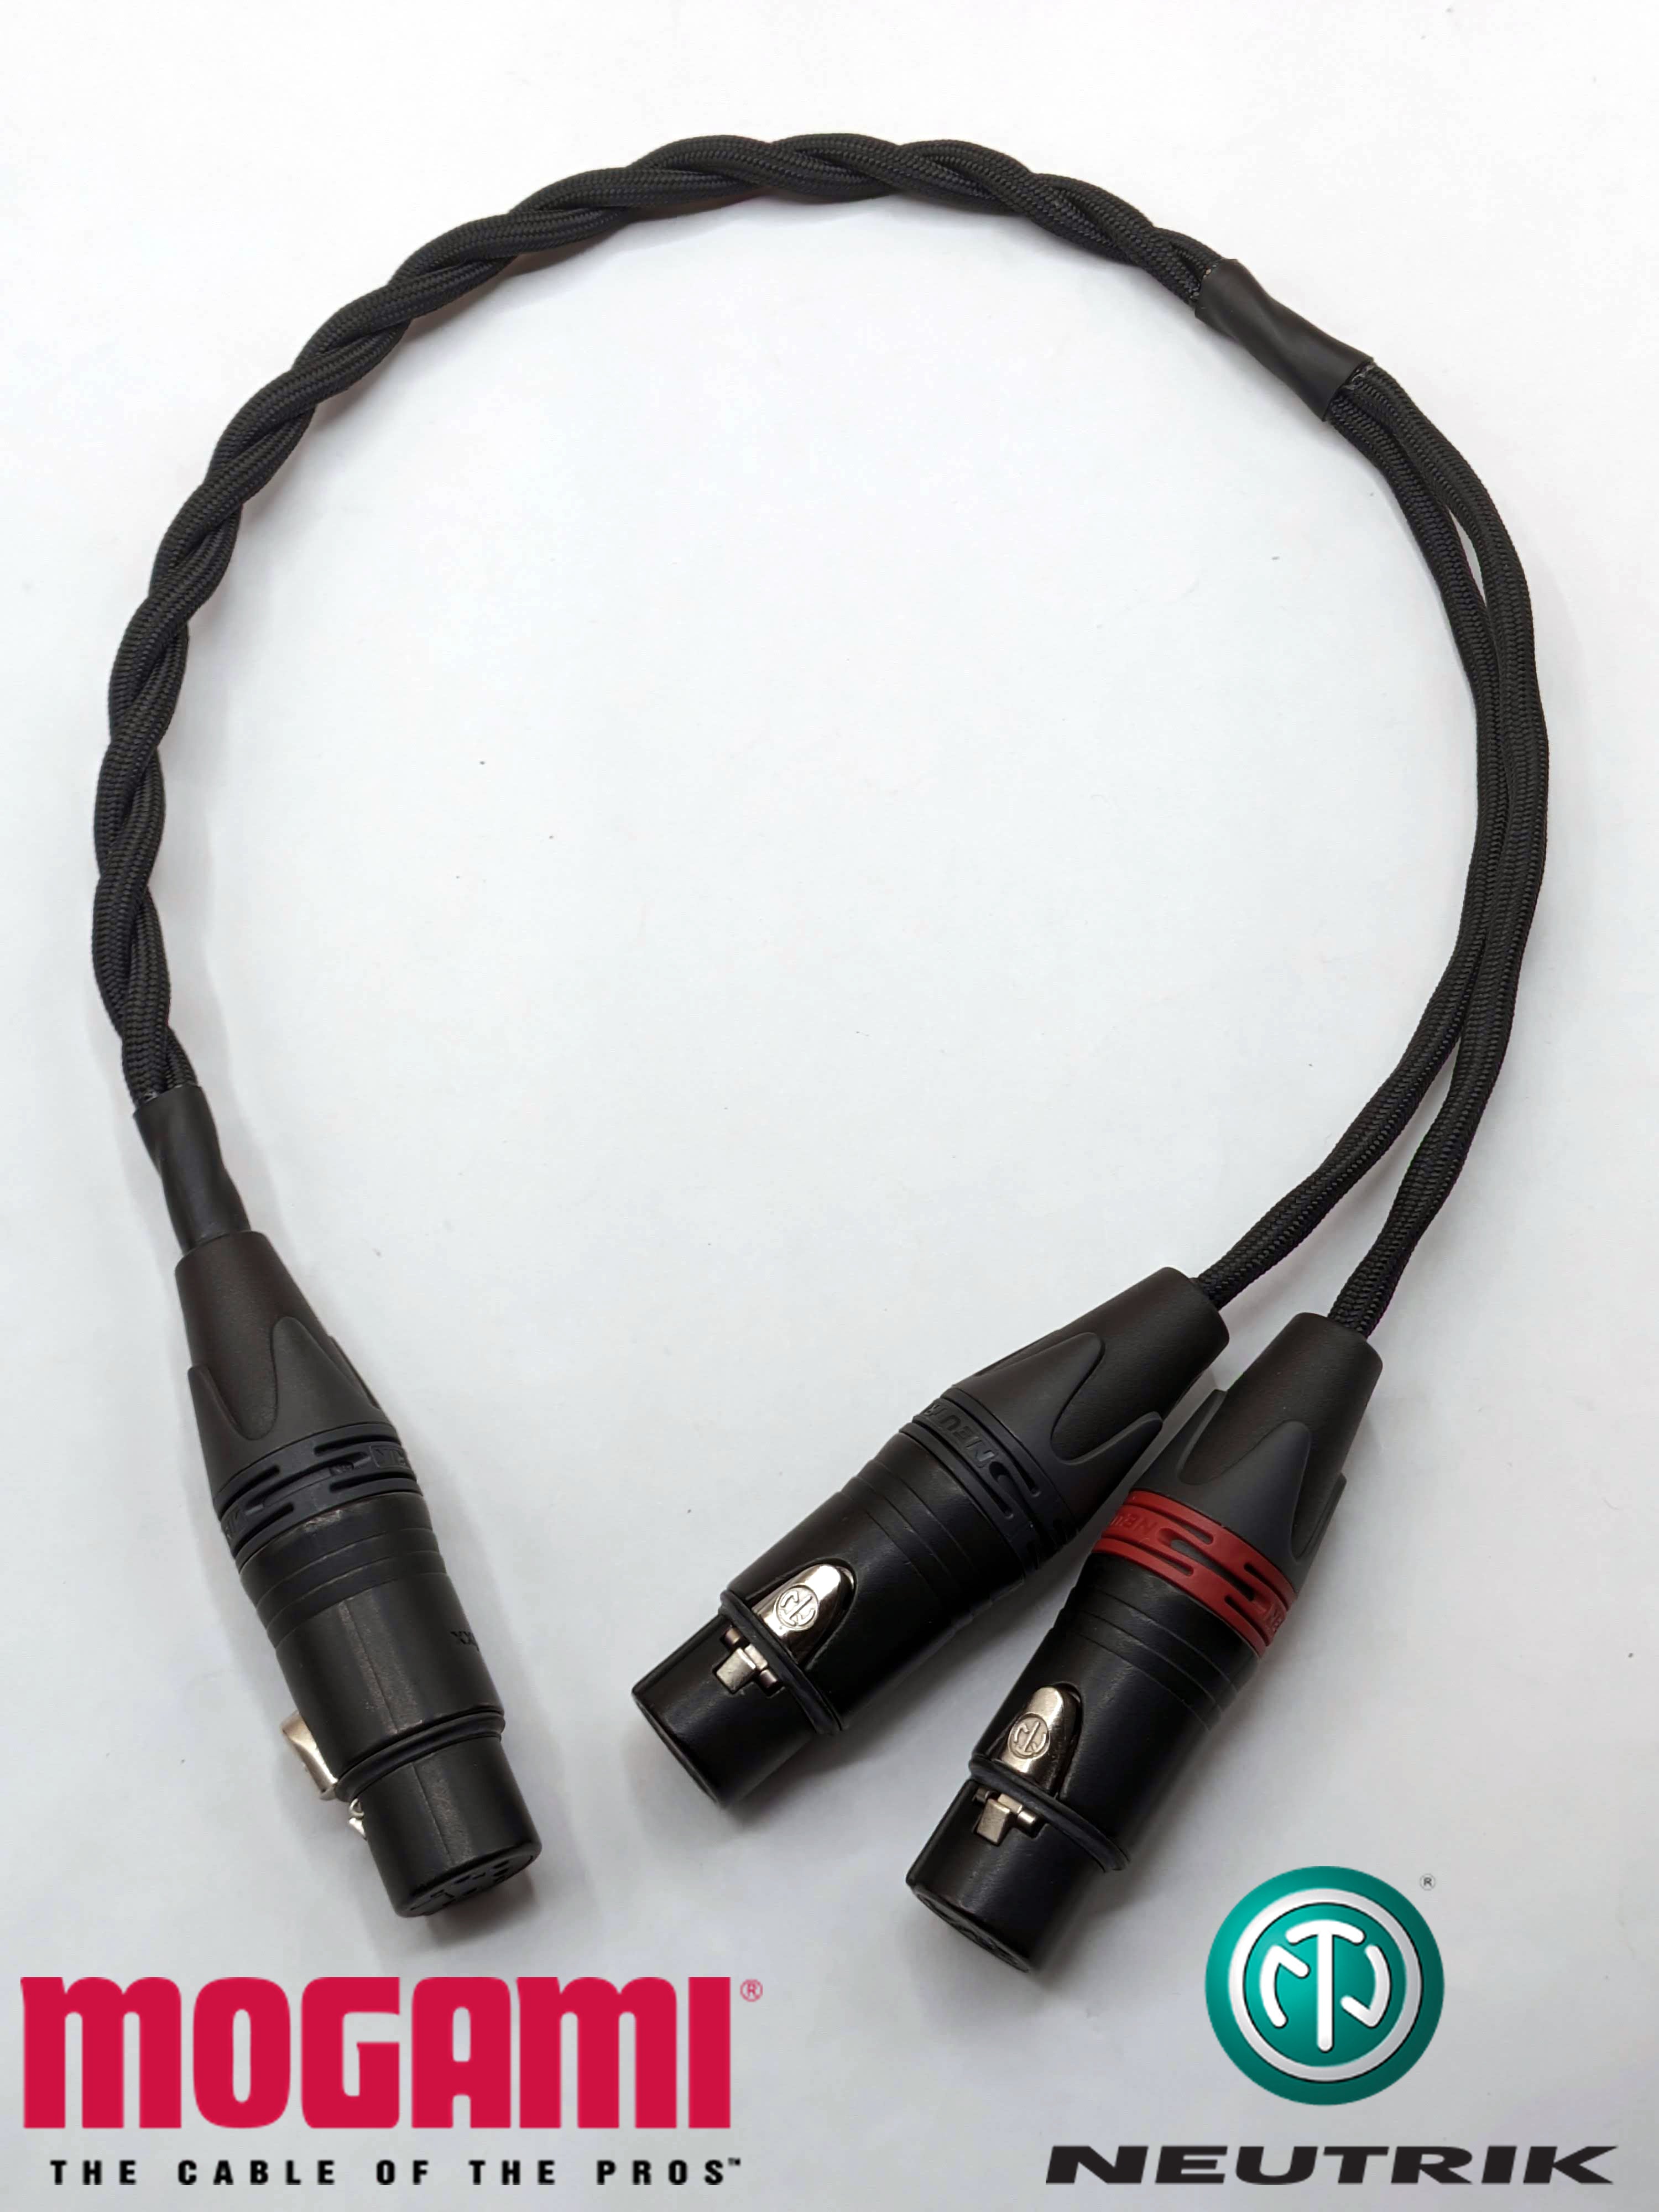 Adaptor Cable - Female 4 Pin XLR to Dual Female 3 Pin XLR - Mogami 22AWG